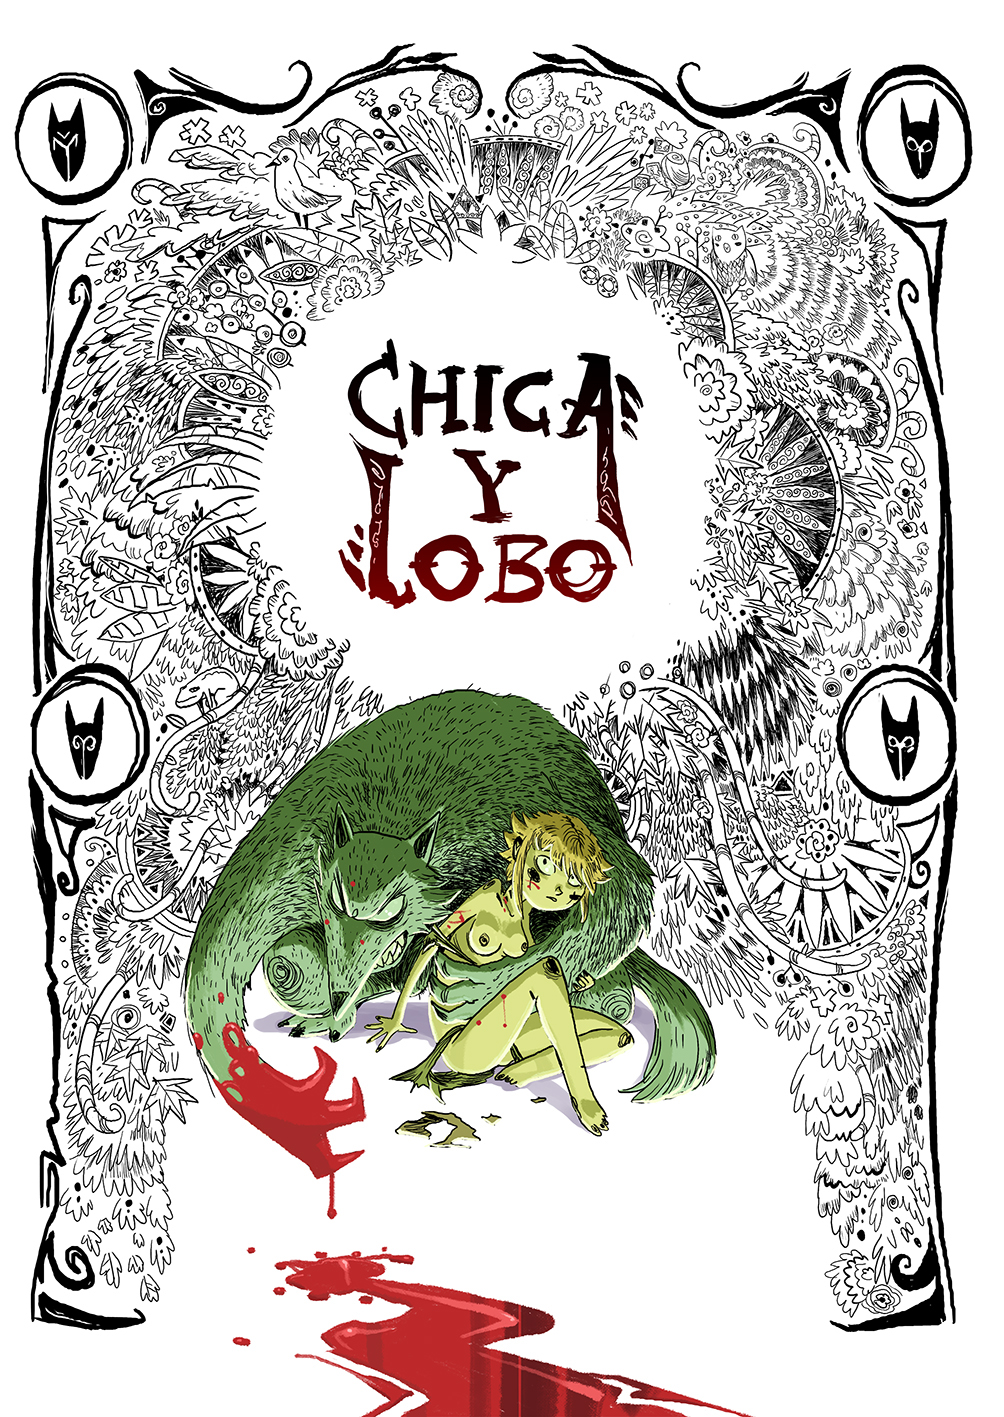 comic chica Lobo Roc espinet Reboot chicaylobo bandee desinee Graphic Novel